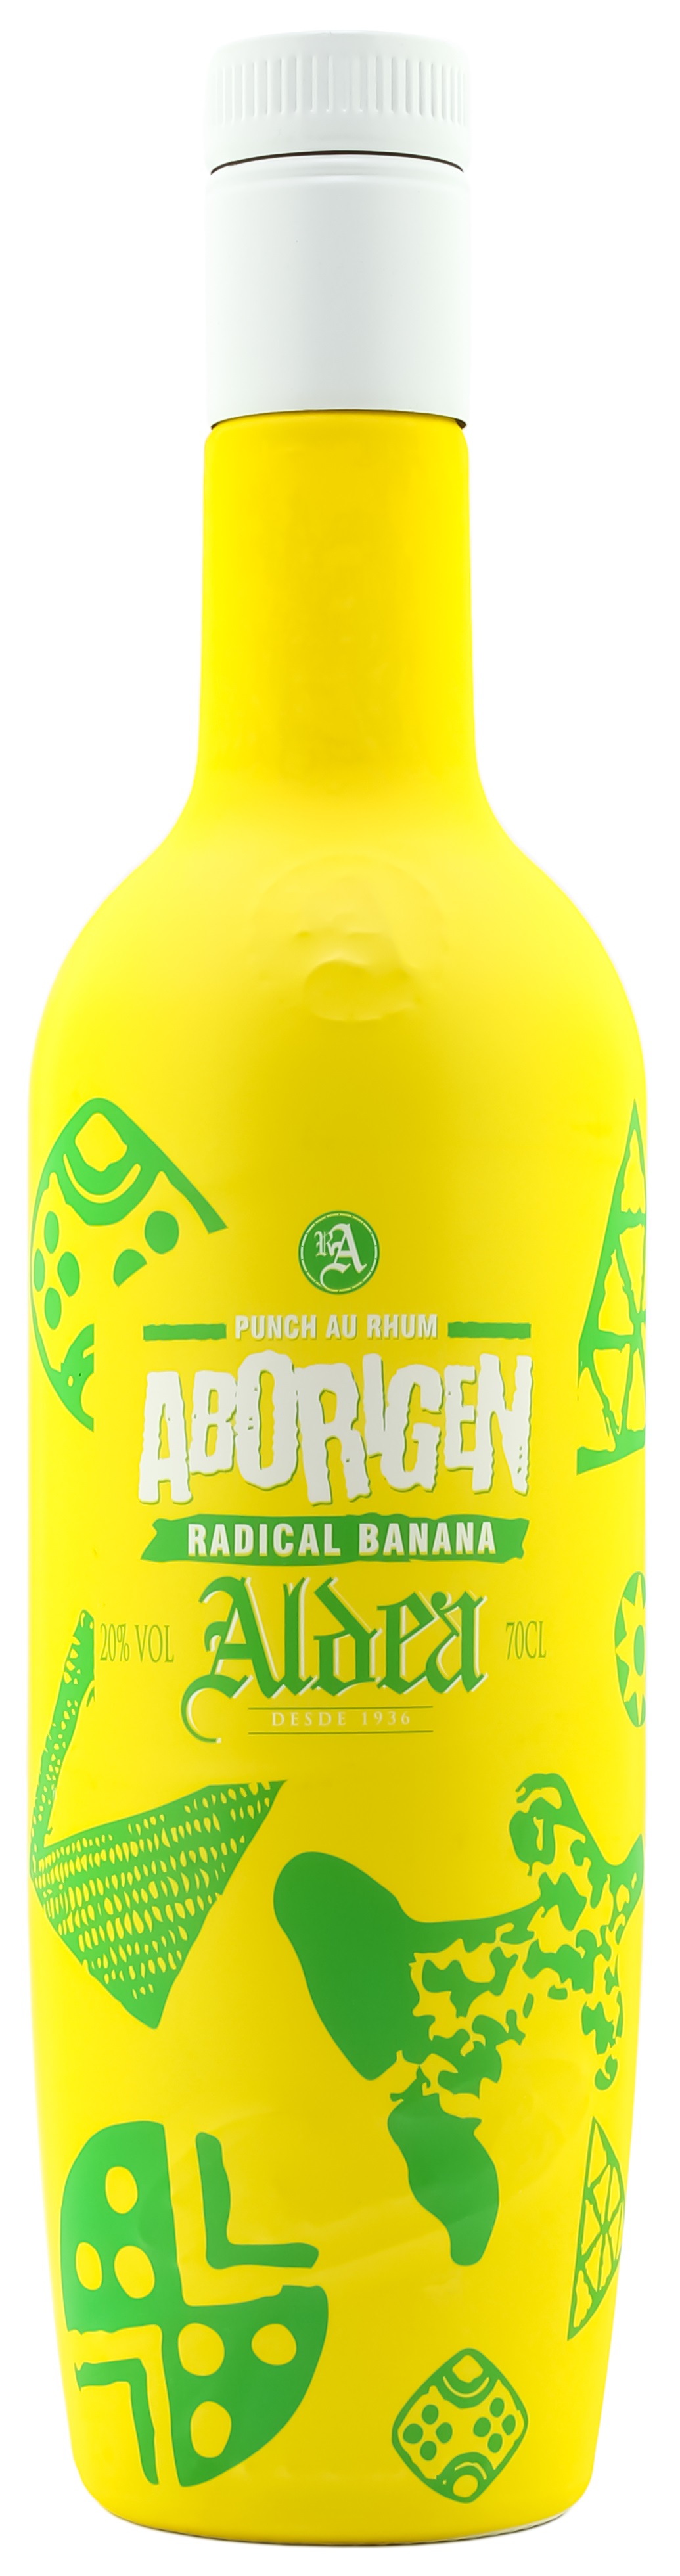 Aldea Aborigen Radical Banana 20.0% 0,7l